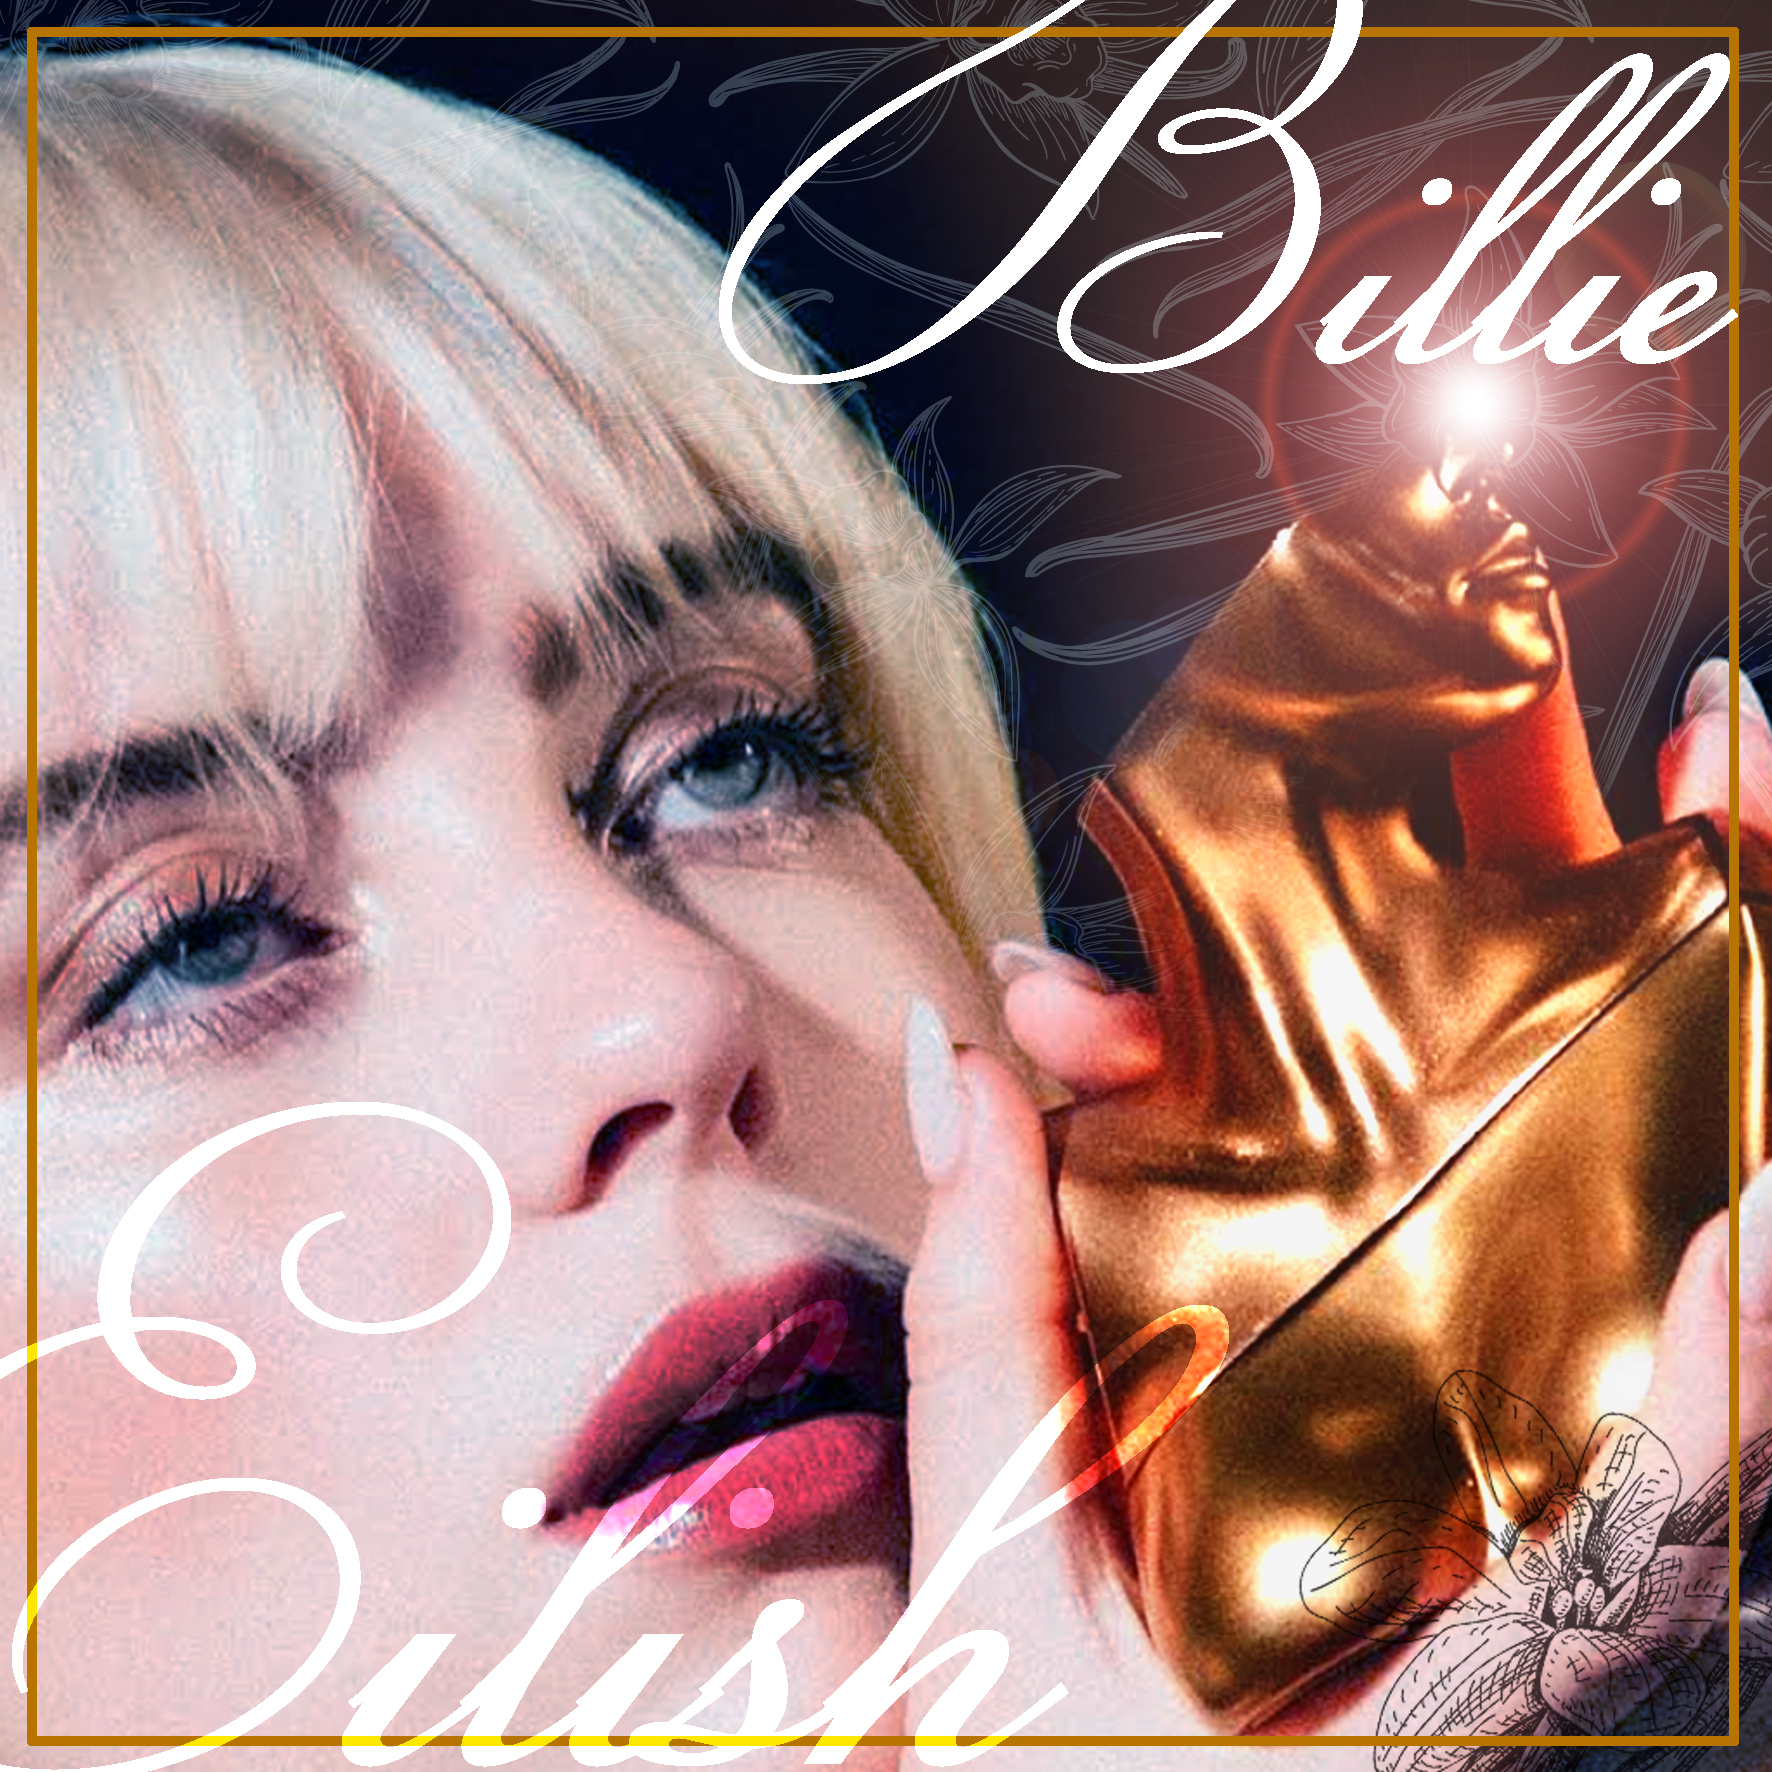 Billie Eilish: Το νέο της άρωμα είναι εμπνευσμένο από την ασθένειά της!